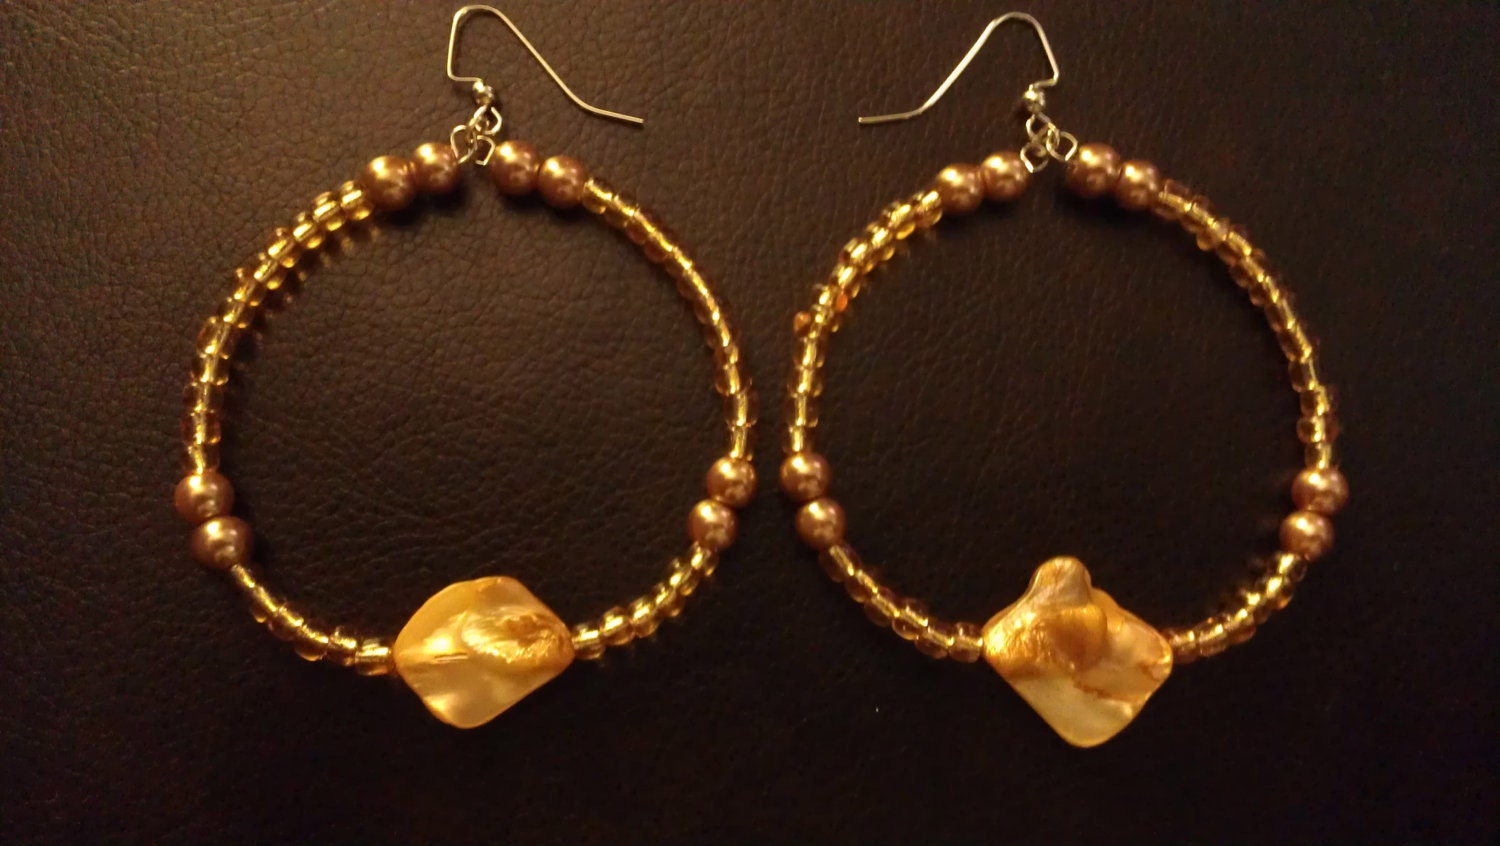 Yellow Beaded Hoop Earrings with Golden Pearl Beads and Iridescnt Yellow Shells: "Sun Catchers"